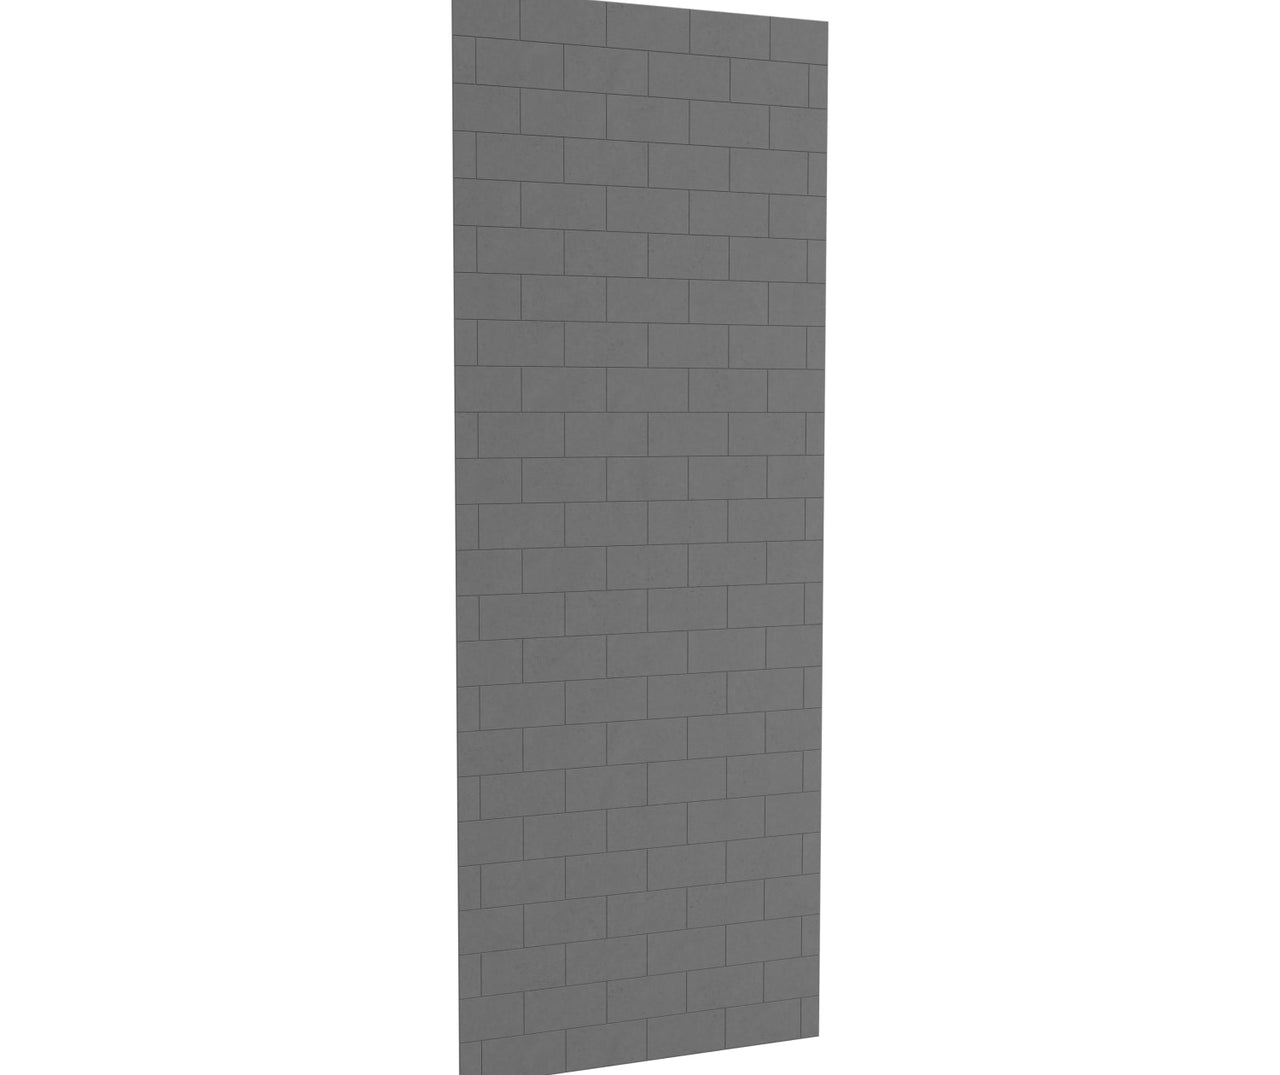 MTMK-9634-1 34 x 96 Swanstone Metro Subway Tile Glue up Bathtub and Shower Single Wall Panel  - BNGBath